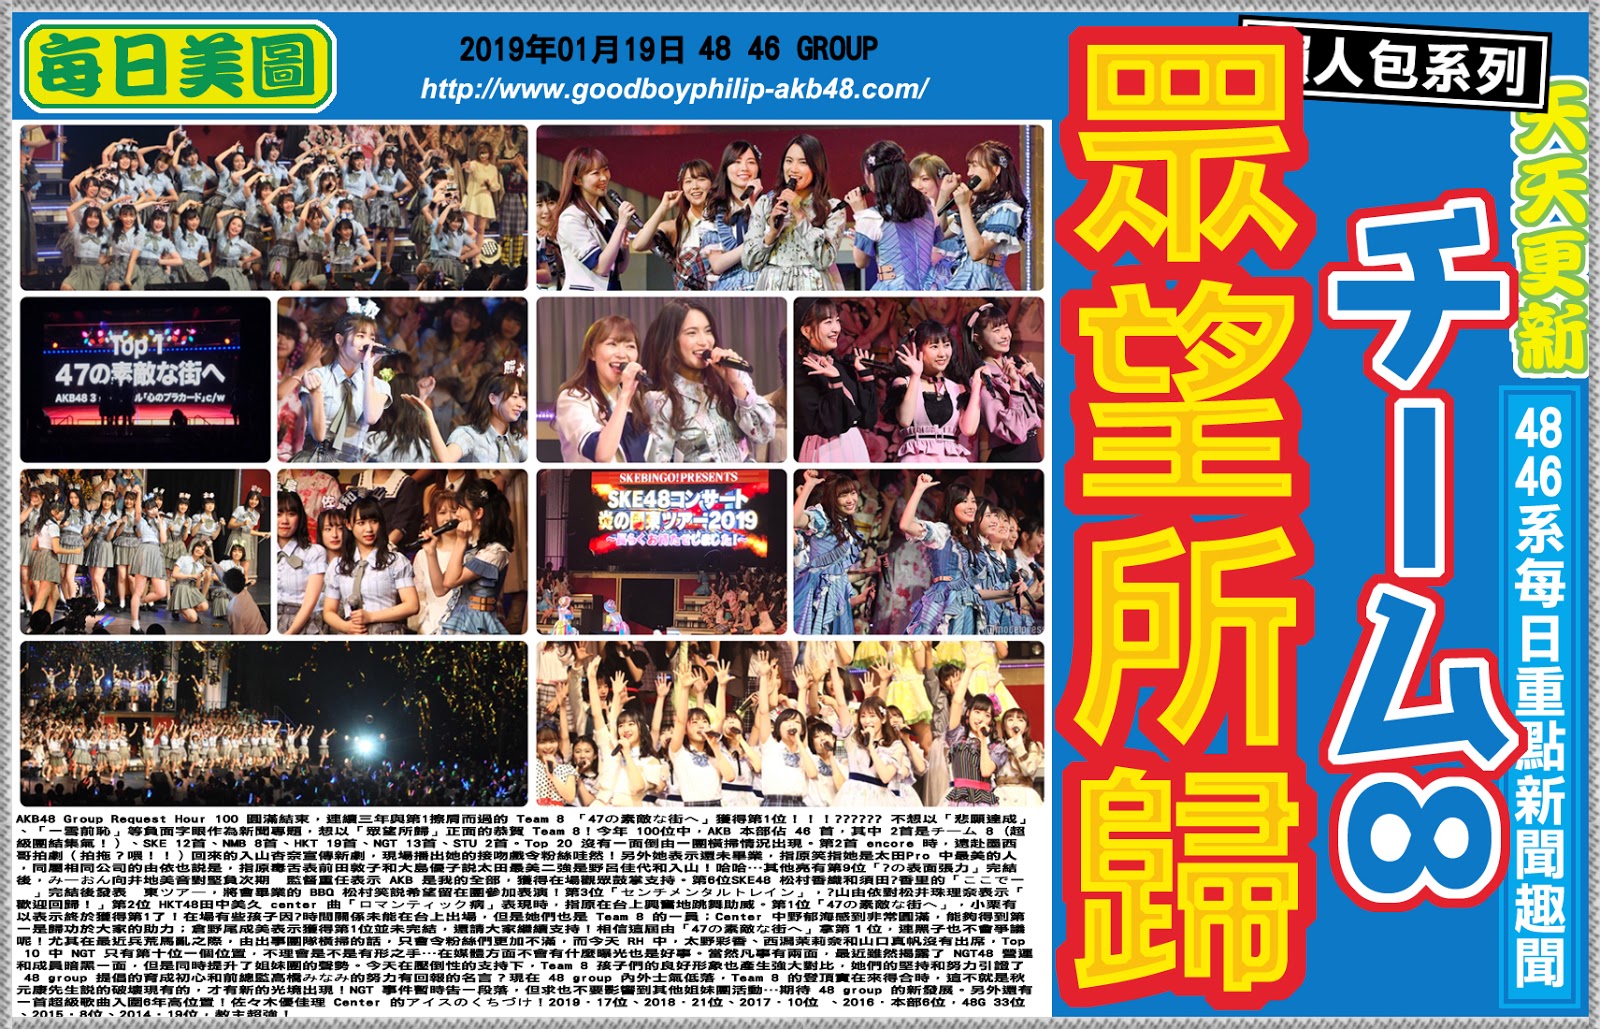 AKB48 新聞 20190120 Team 8 「47の素敵な街へ」獲得 Request Hour 獲得第1位